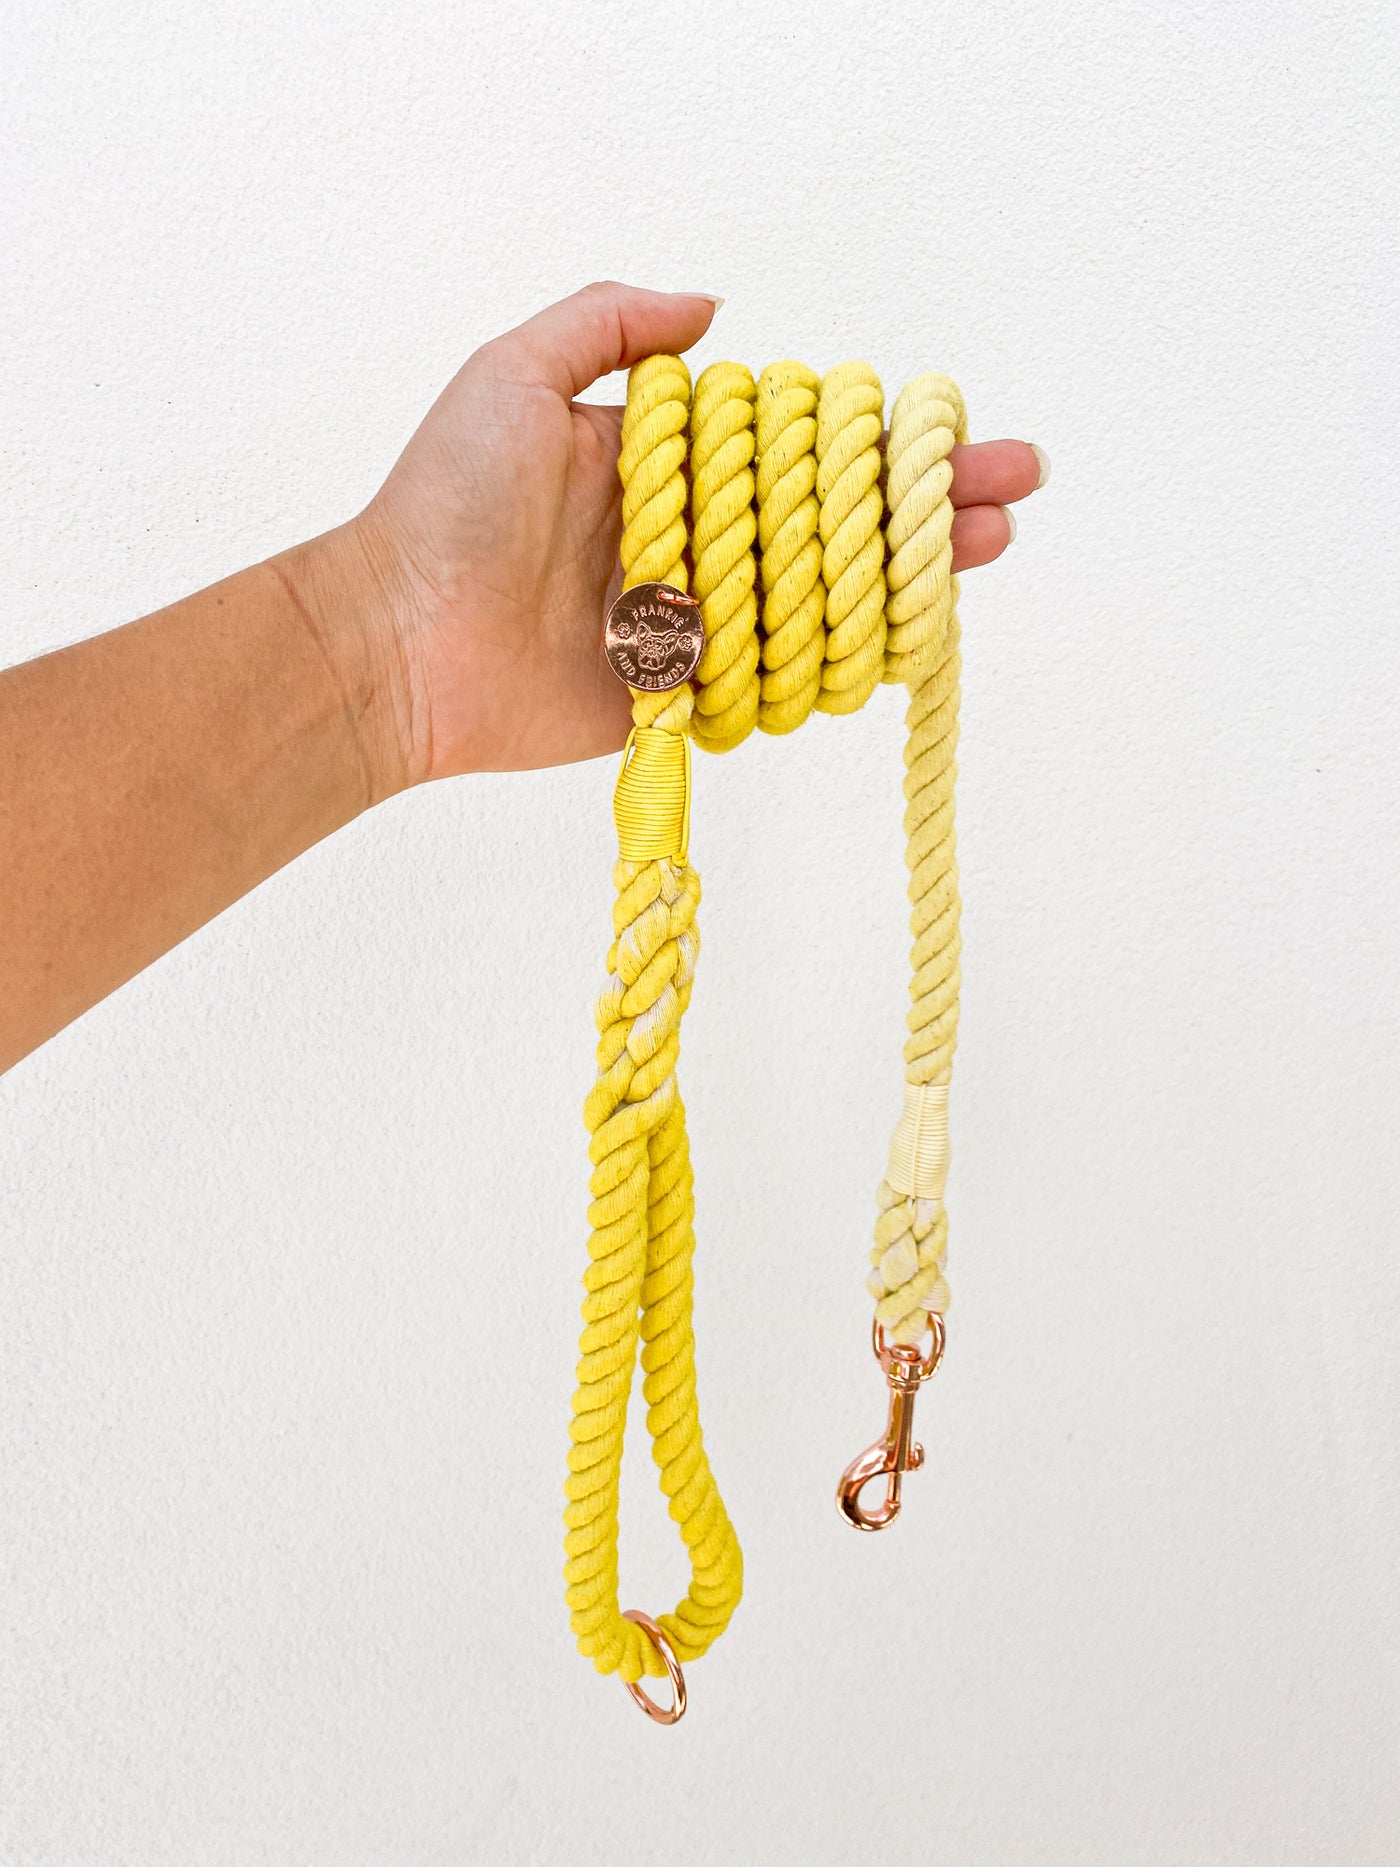 Lemon Yellow Ombre - Rope Dog Lead